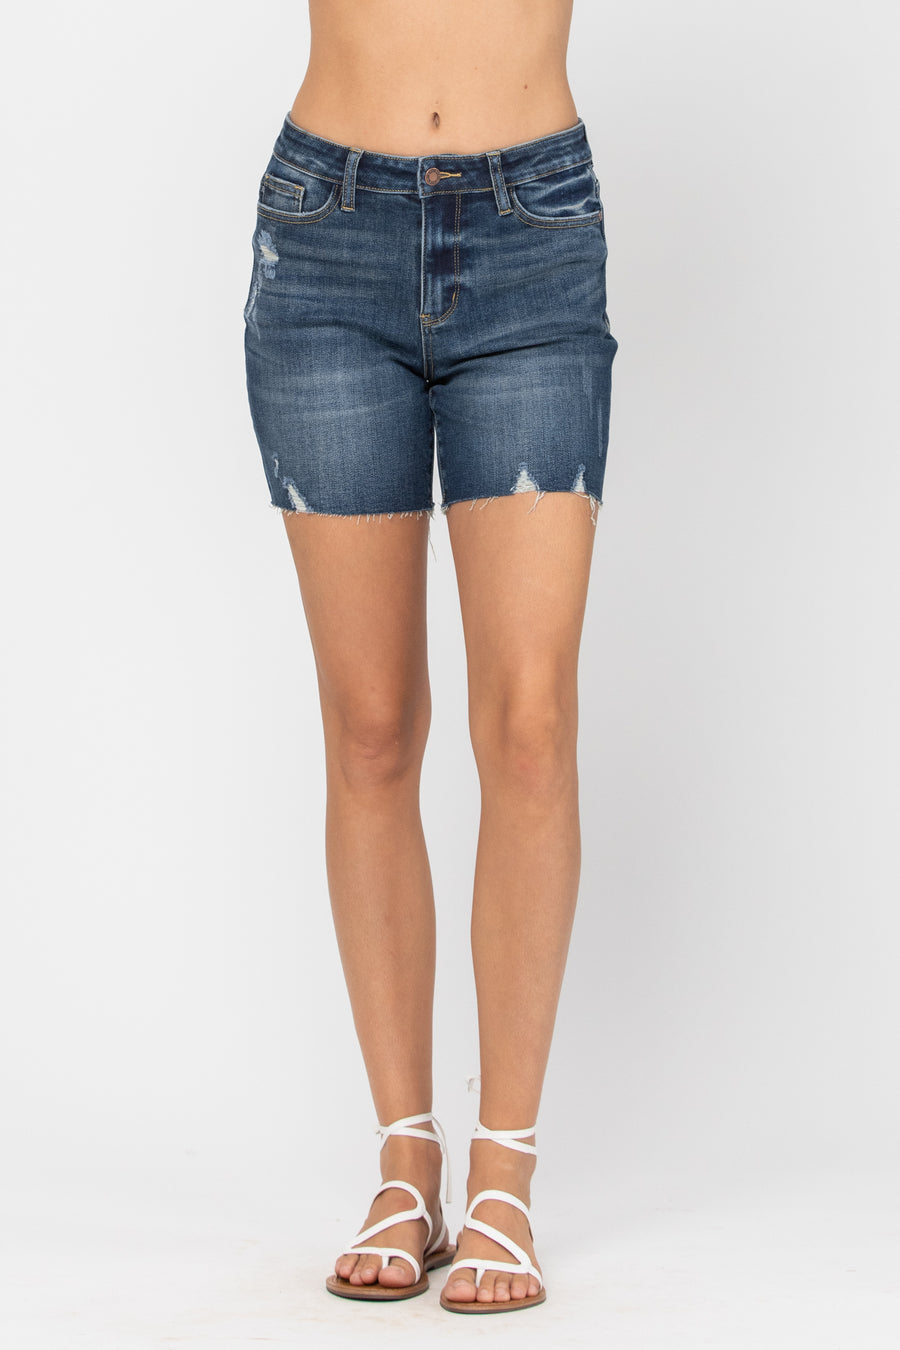 Kayla Mid-Thigh Shorts